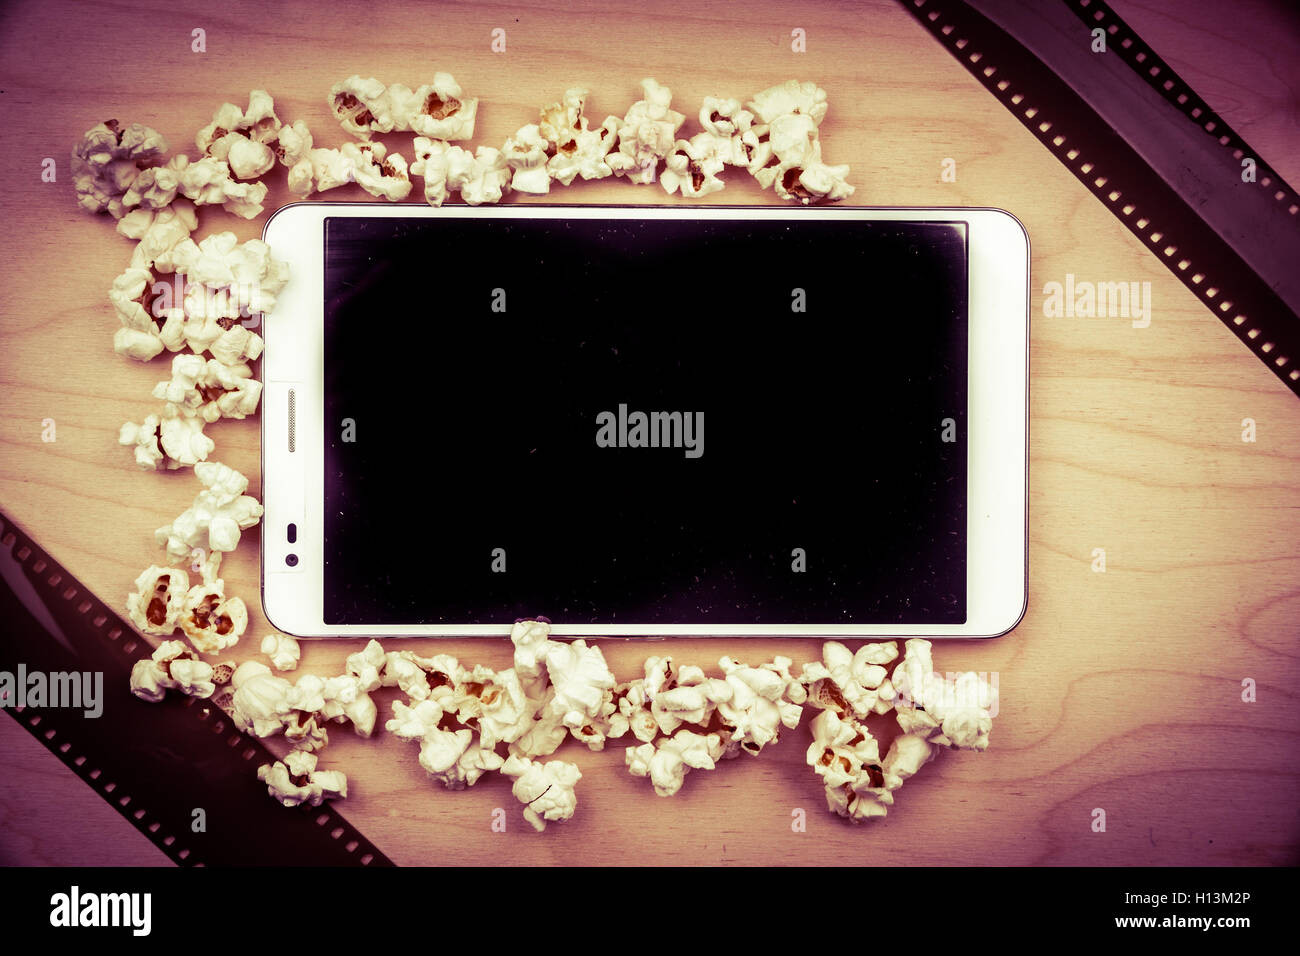 Tablet-pc auf Holz mit Attributen des Kinos. Stockfoto